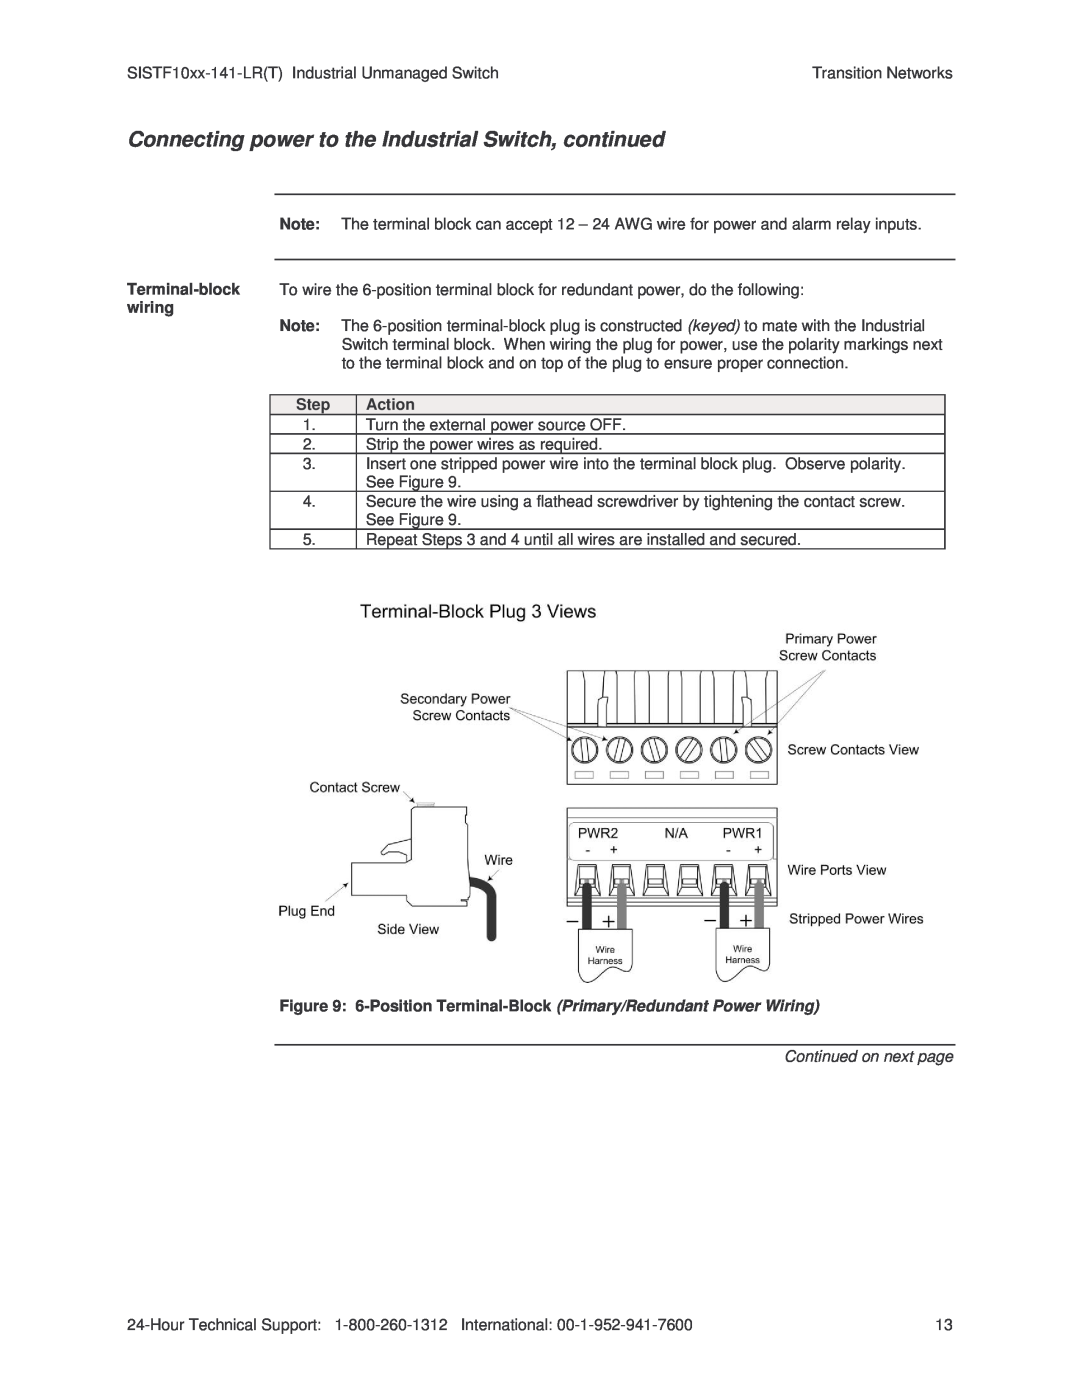 Transition Networks SISTF10xx-141-LR(T) installation manual SISTF10xx-141-LRTIndustrial Unmanaged Switch 